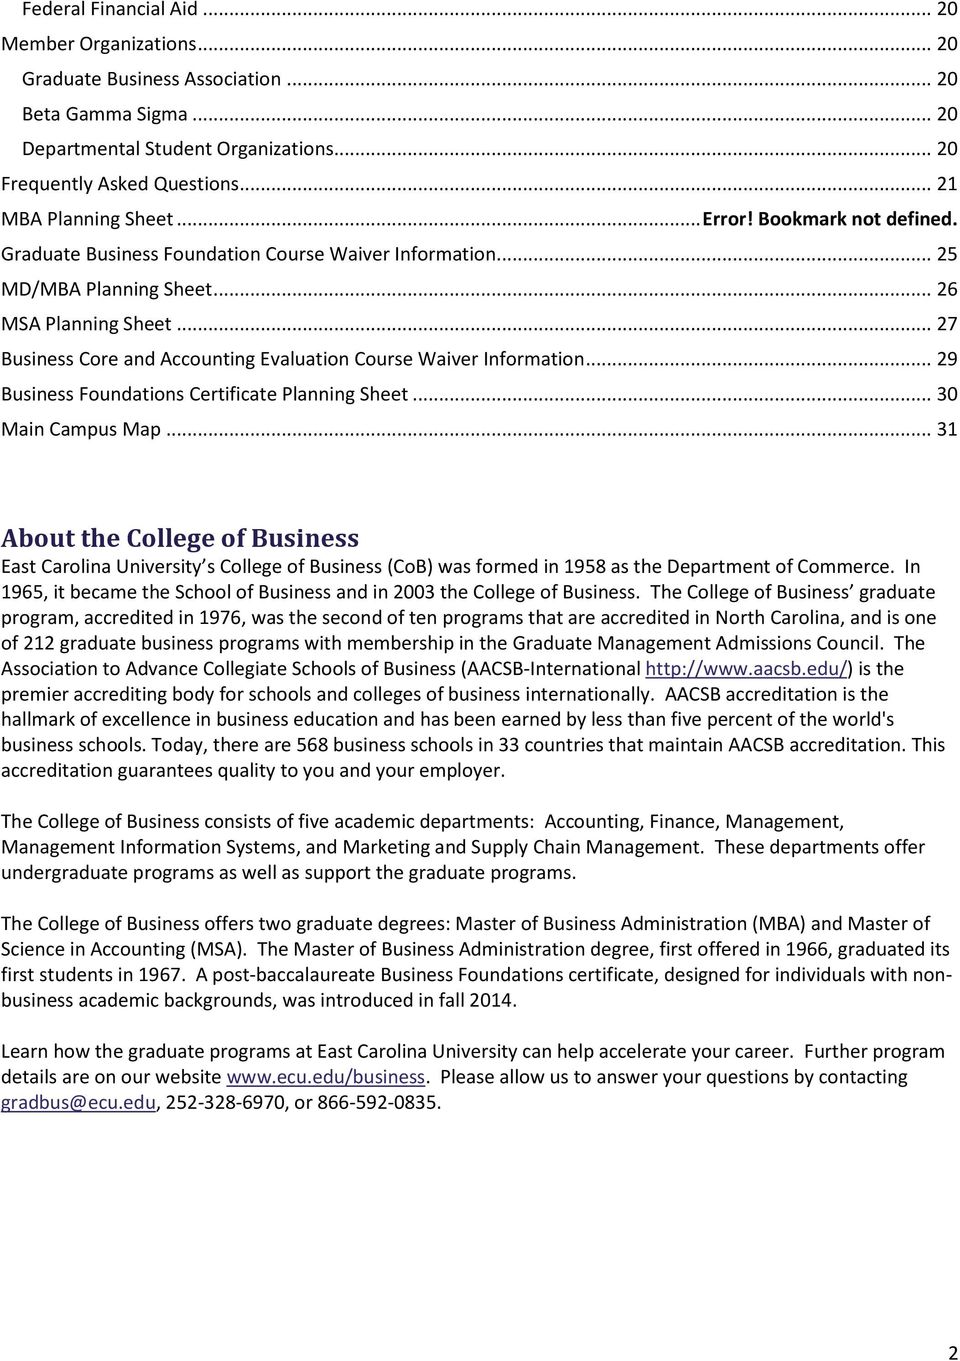 East Carolina University College Of Business Graduate Programs